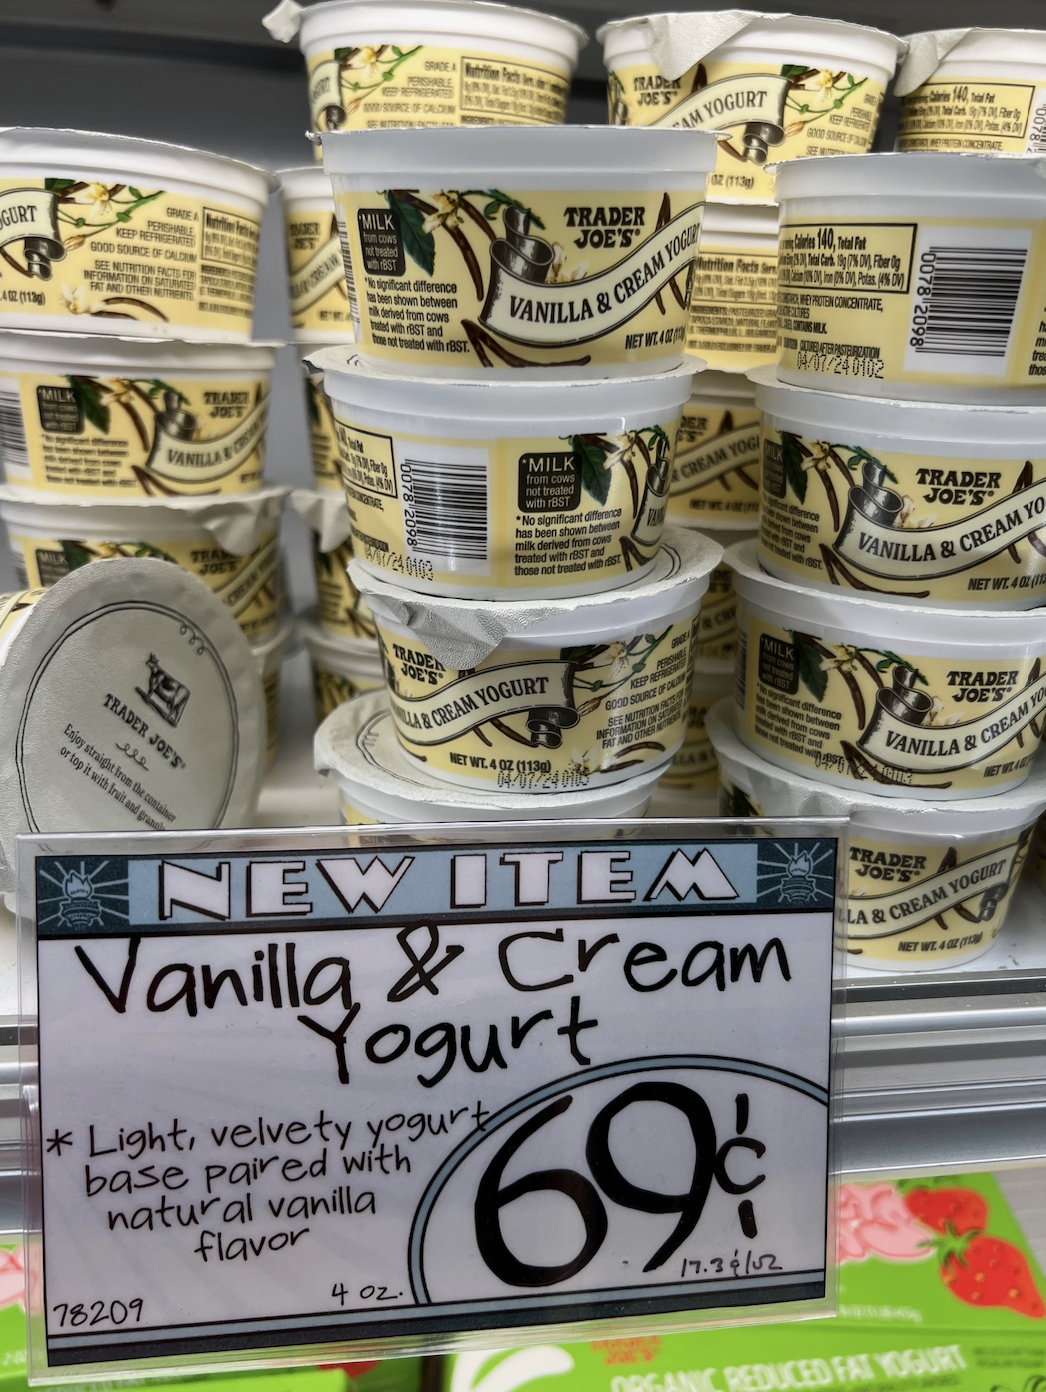 Shelves stocked with Vanilla &amp;amp; Cream Yogurt cups at Trader Joe&#x27;s, price tag displays 69 cents each